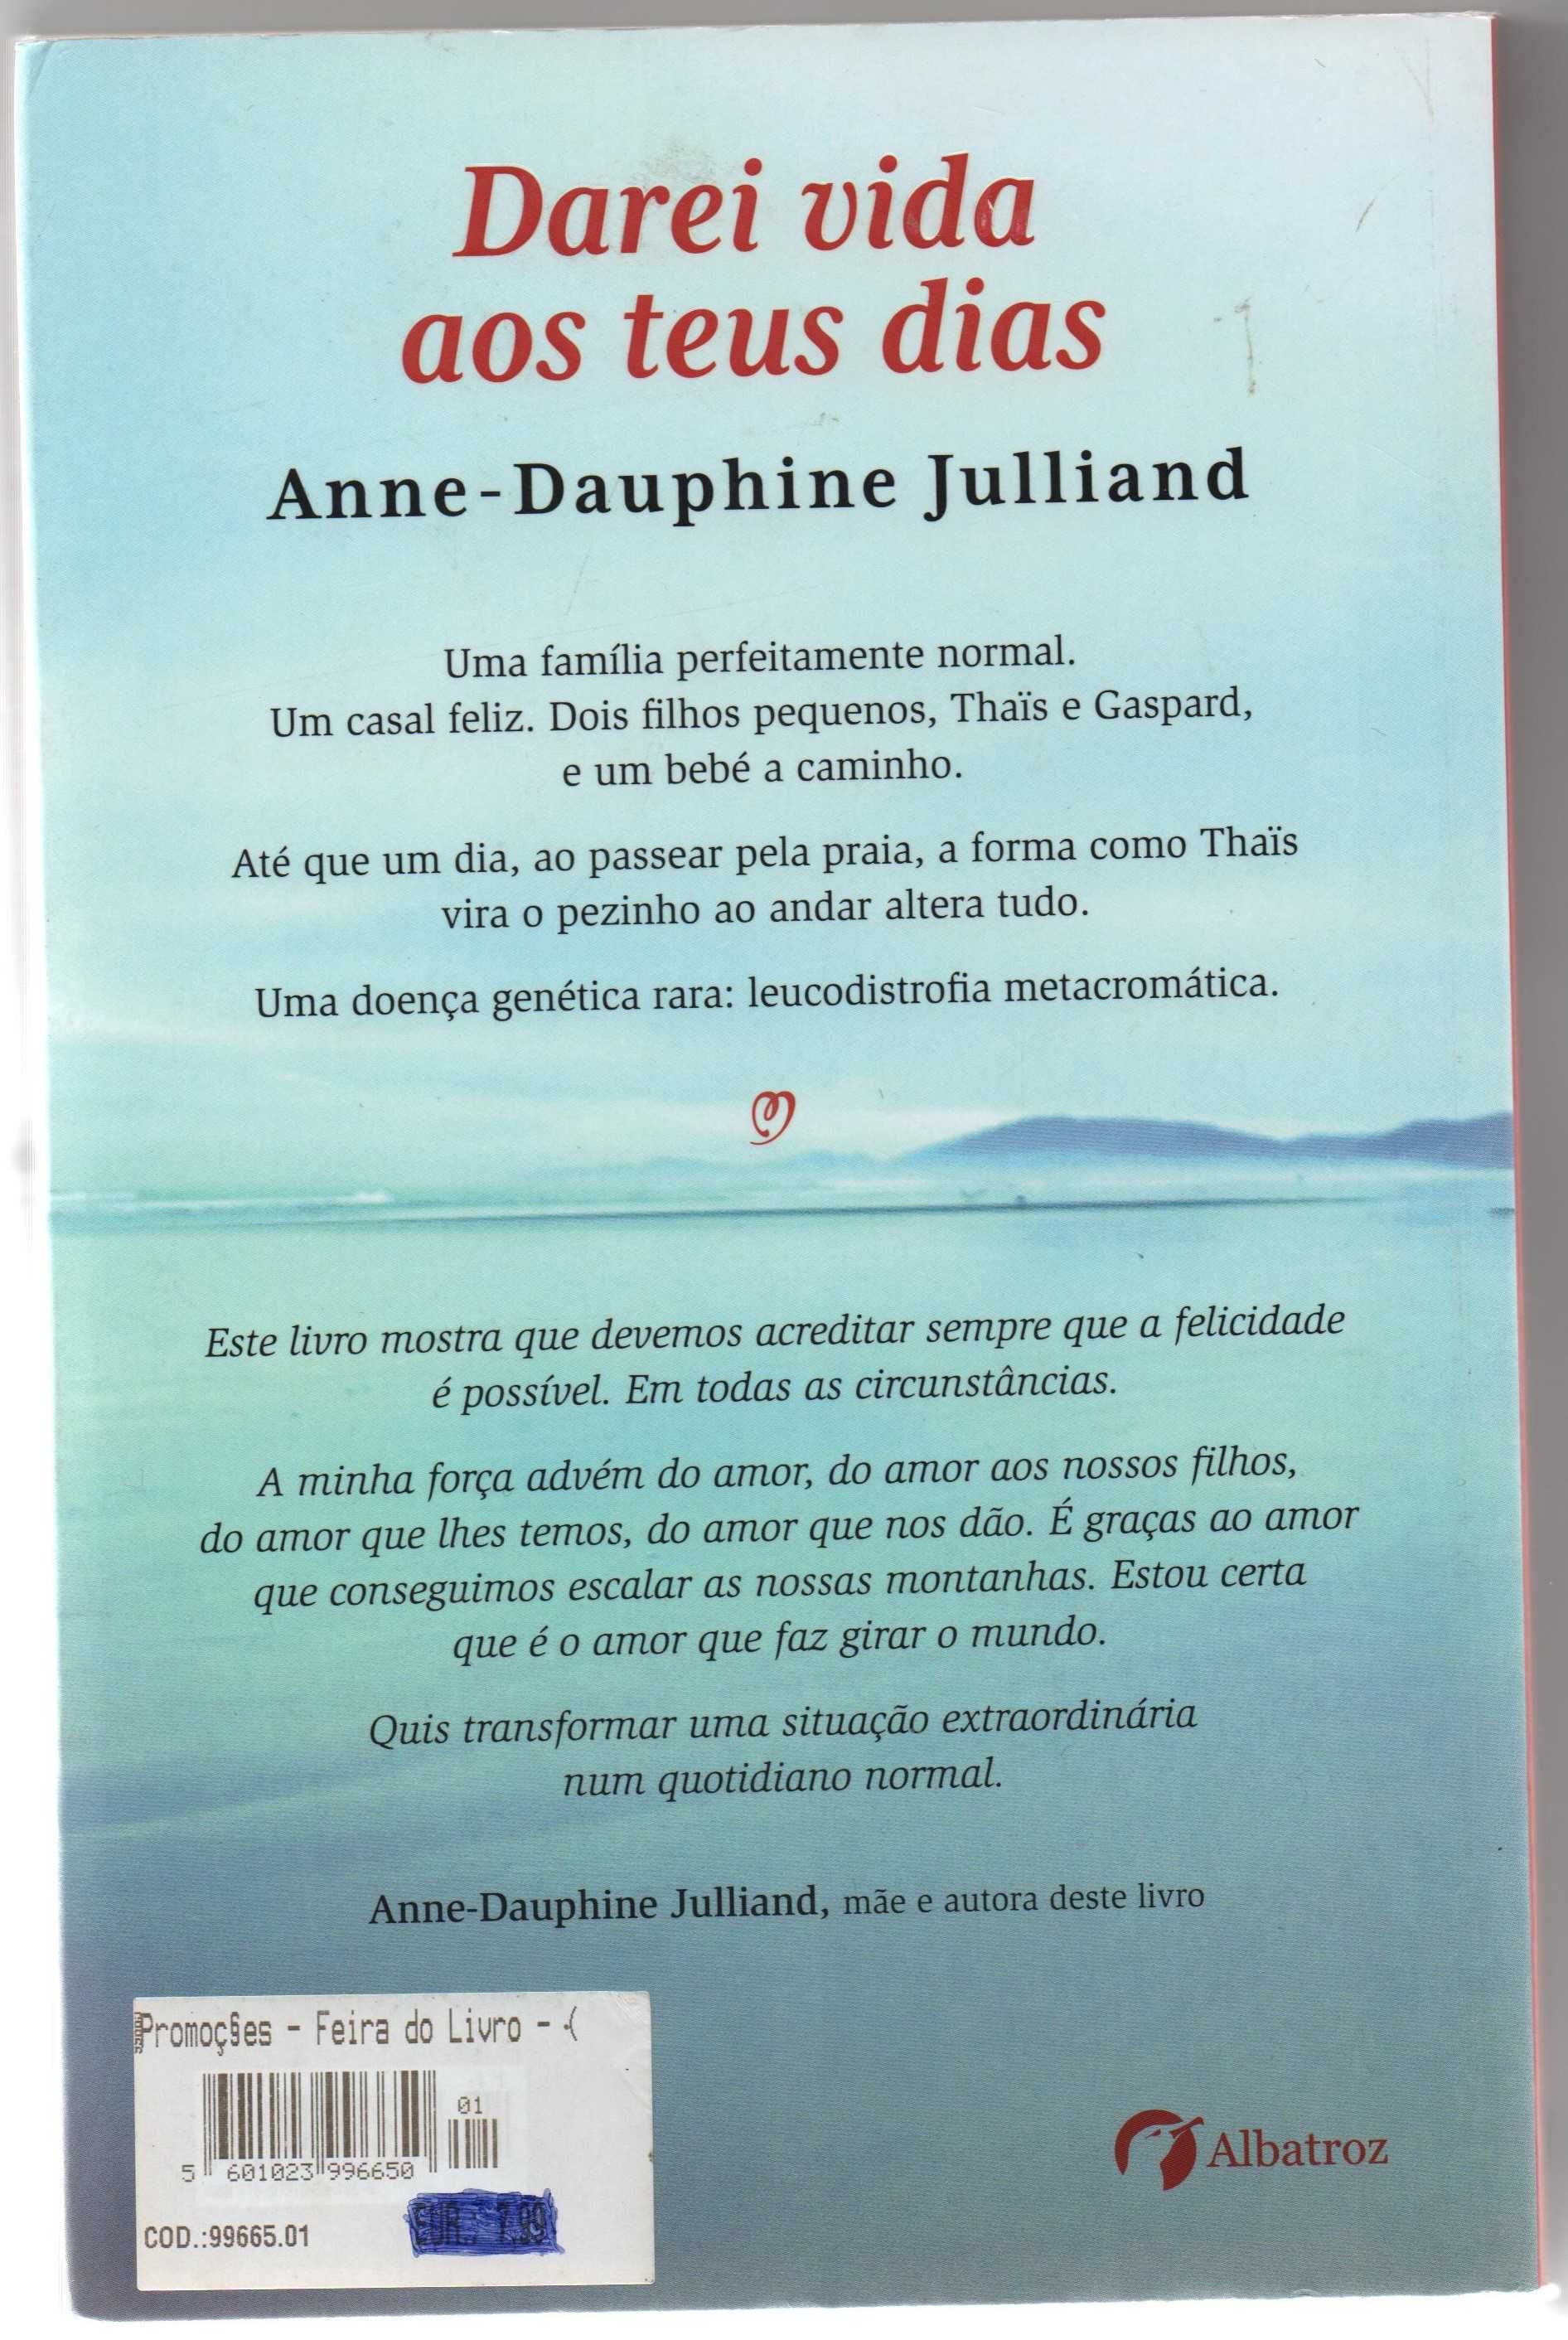 livro Darei vida aos teus dias
de Anne-Dauphine Julliand